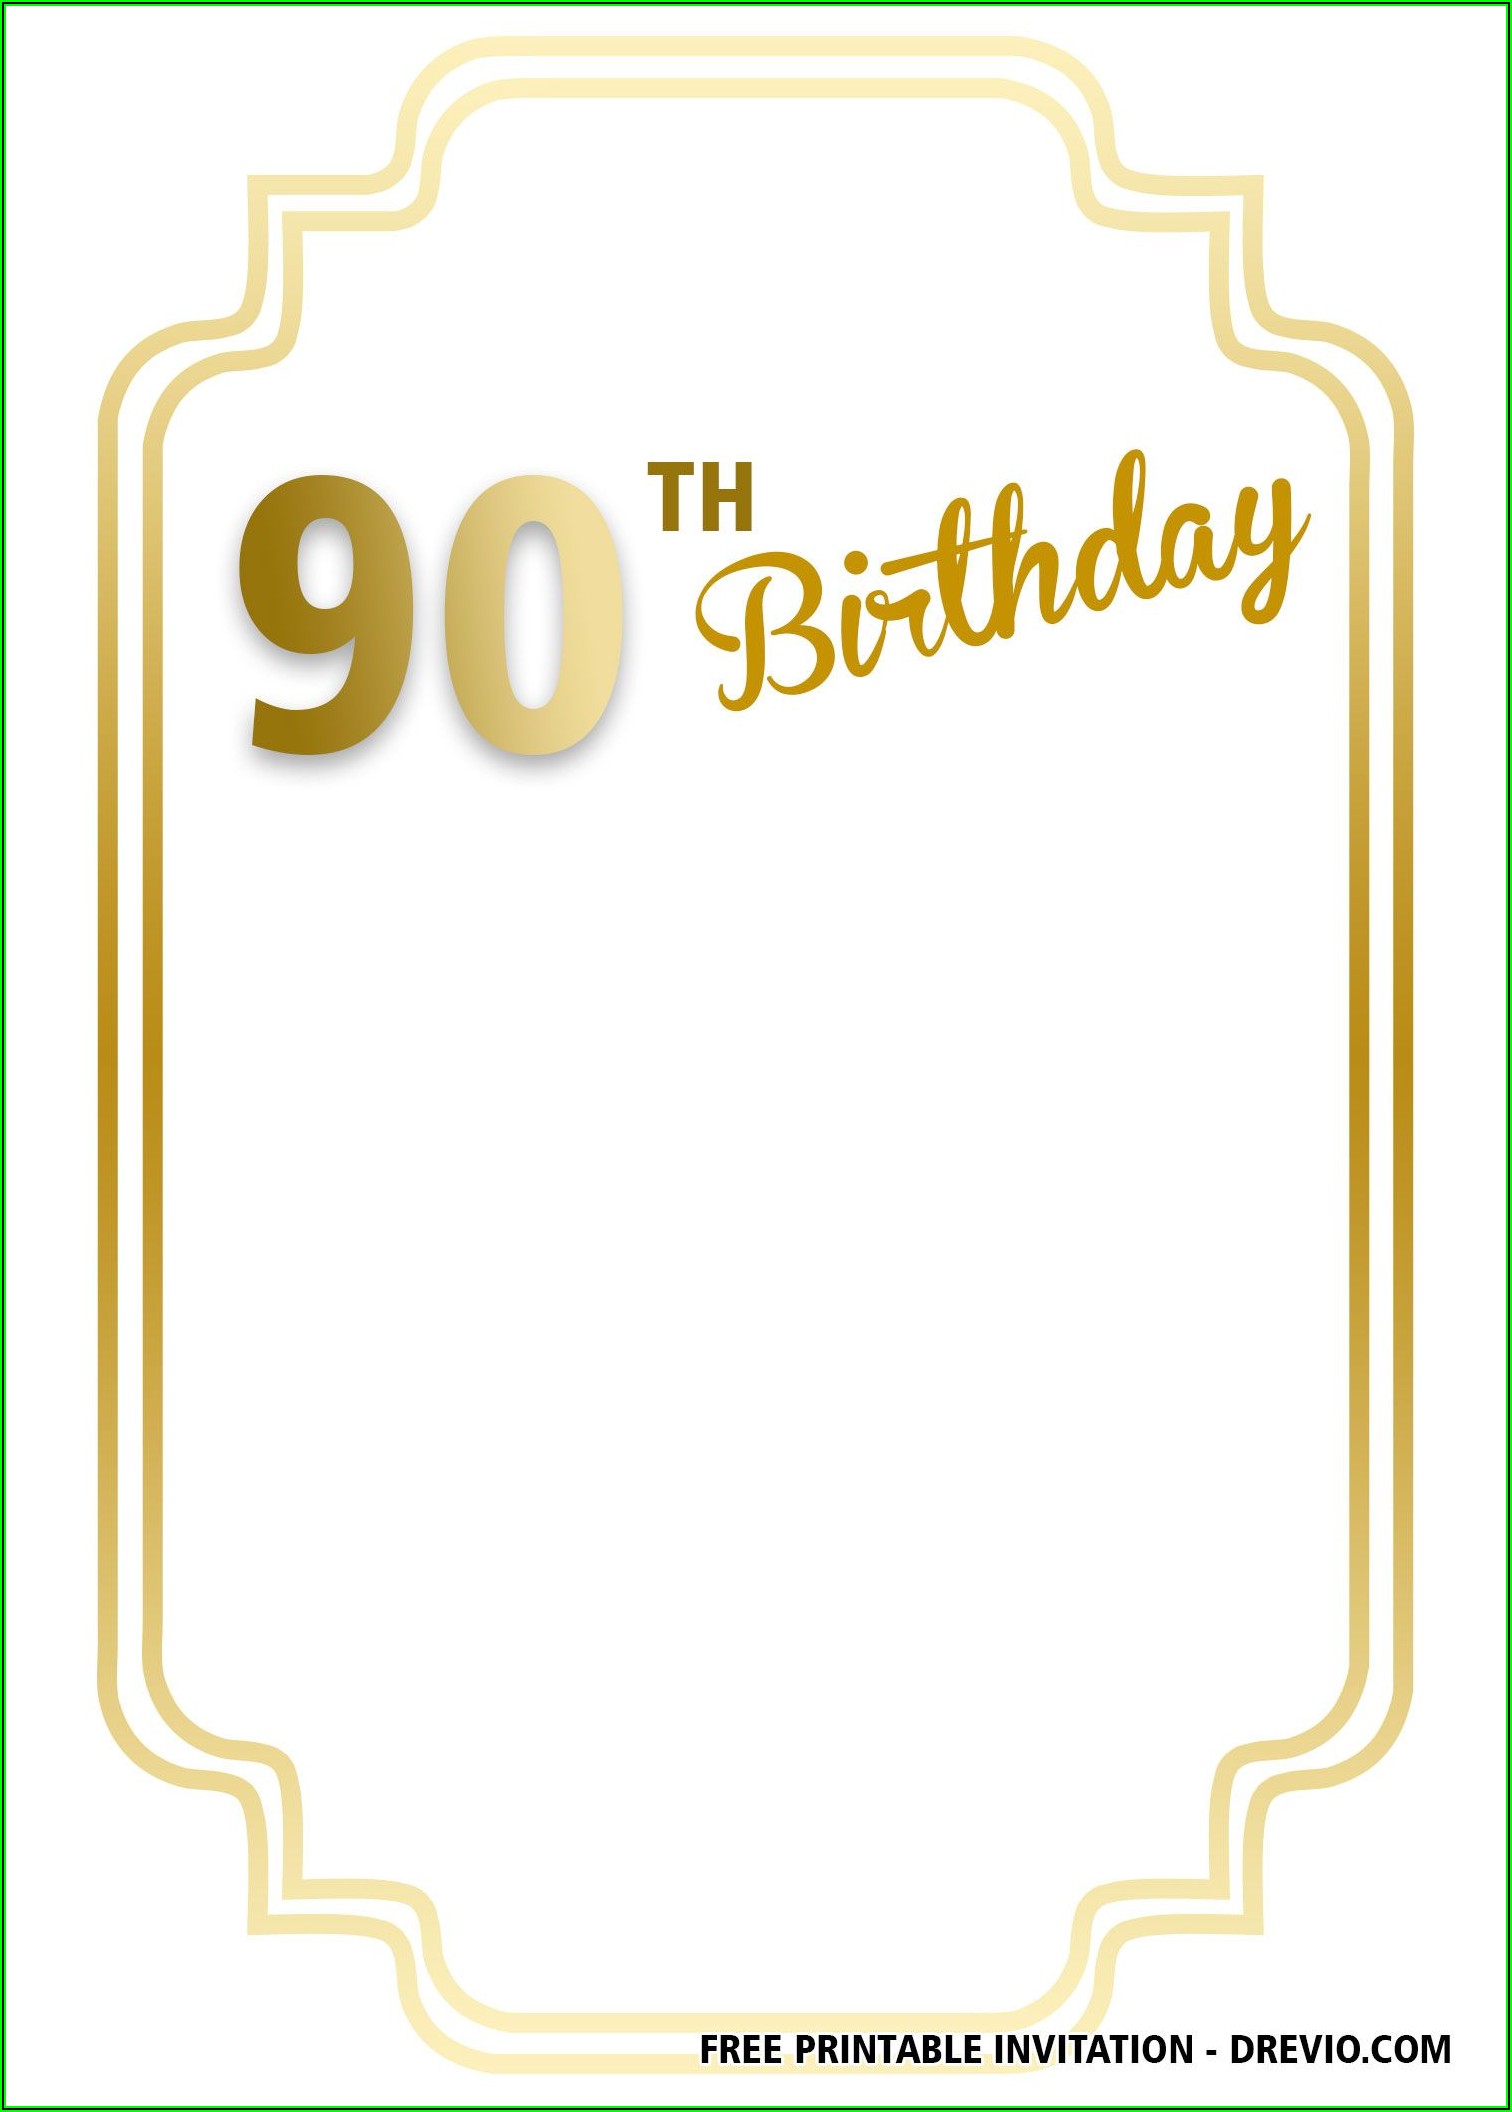 90th Birthday Invitation Template Free